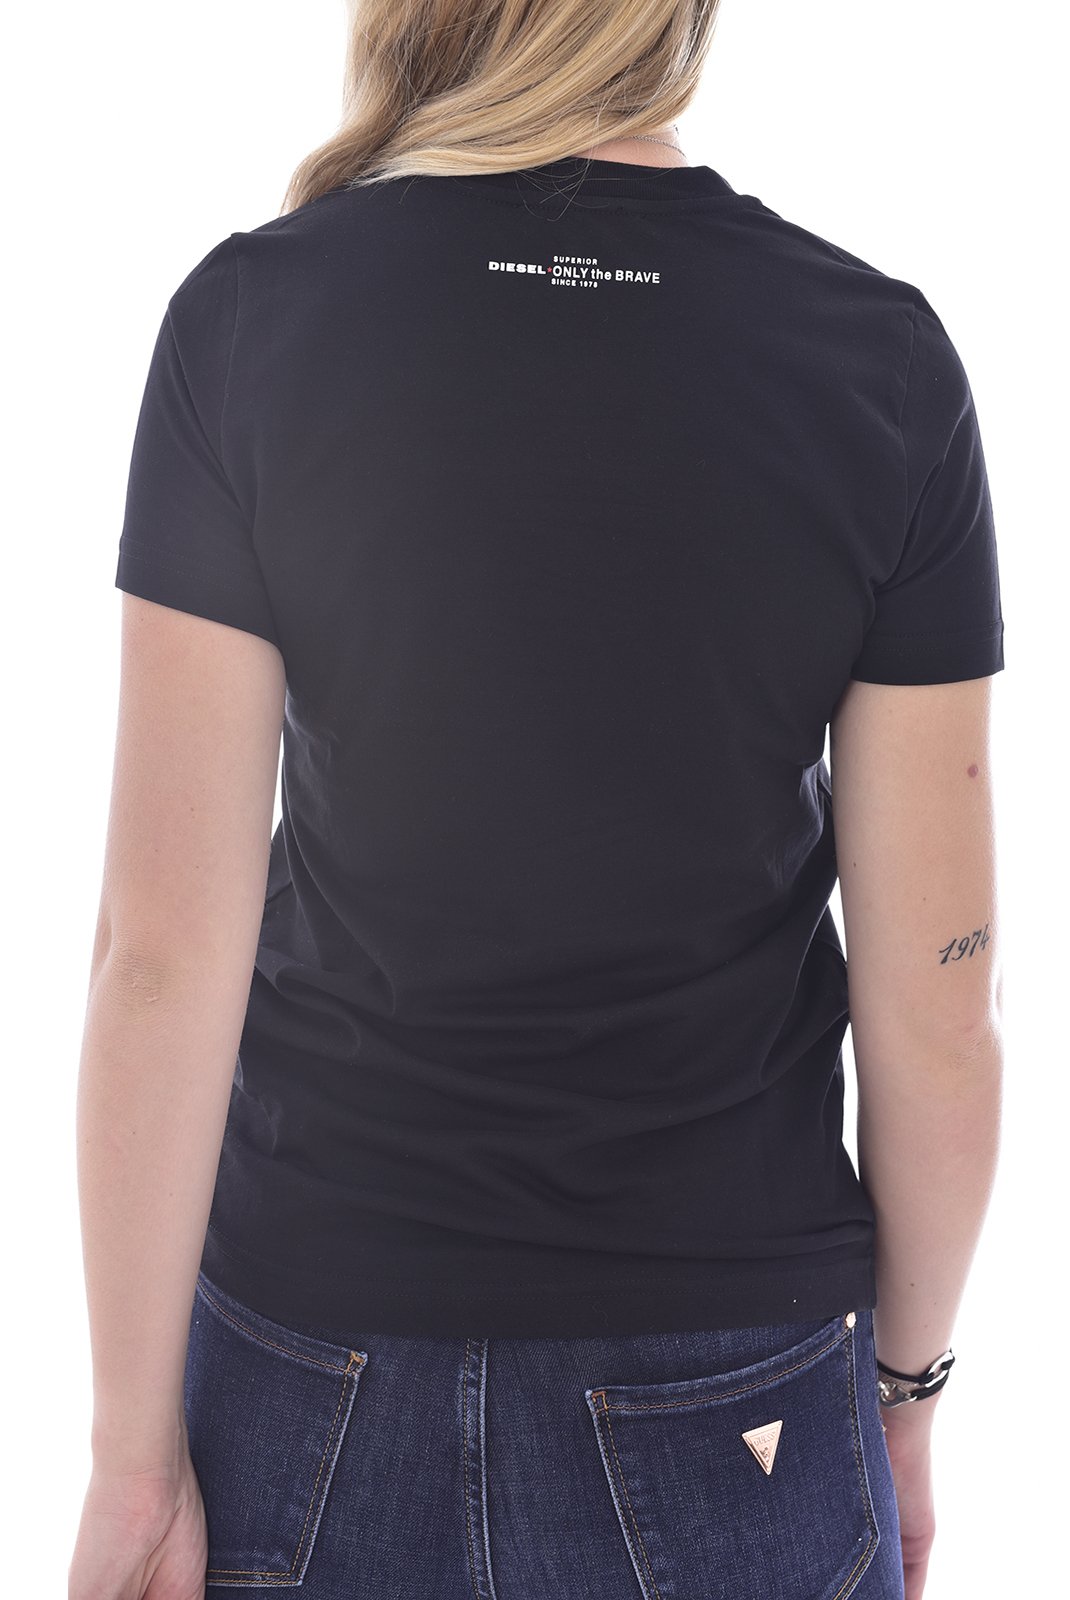 Tee shirt  Diesel T-SILY-WG 9XX noir